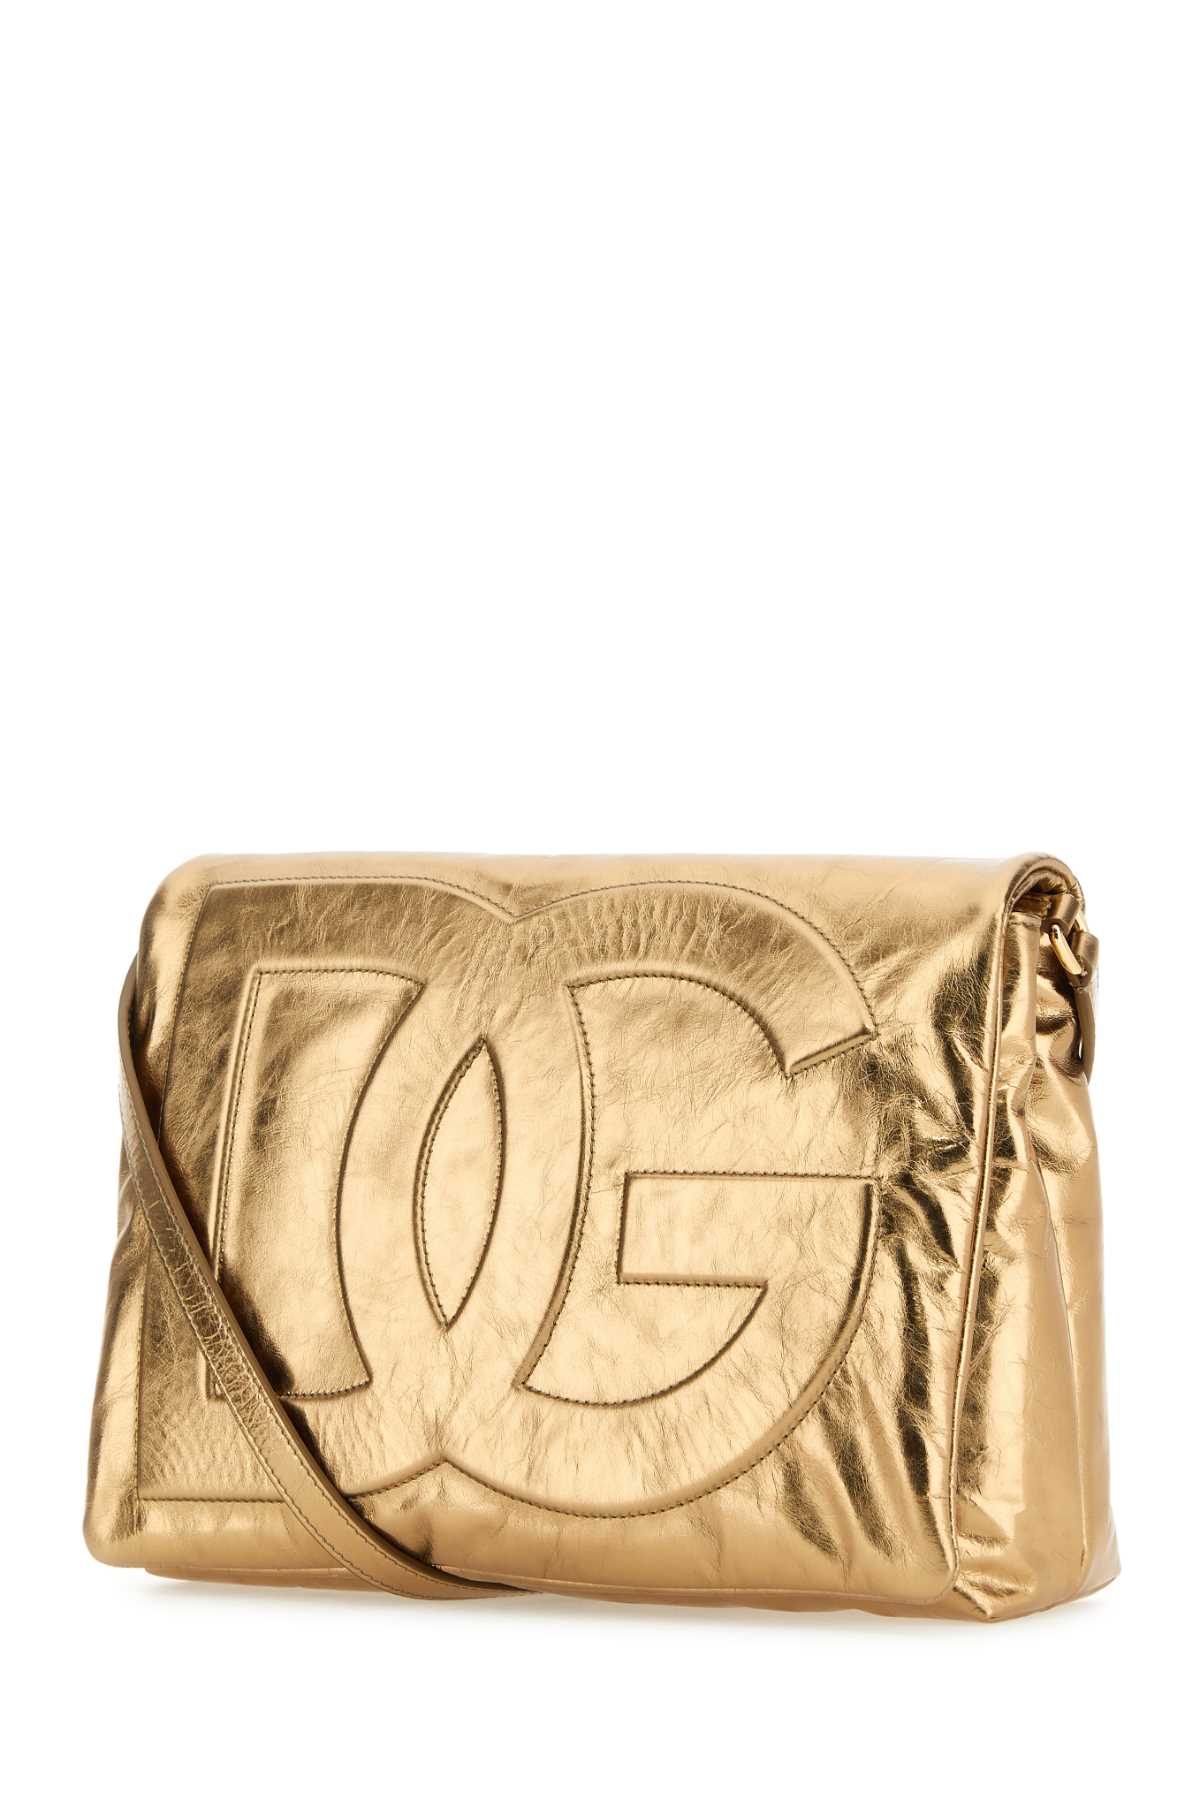 Dolce & Gabbana Gold Leather Dg Logo Bag Soft Clutch In Oro